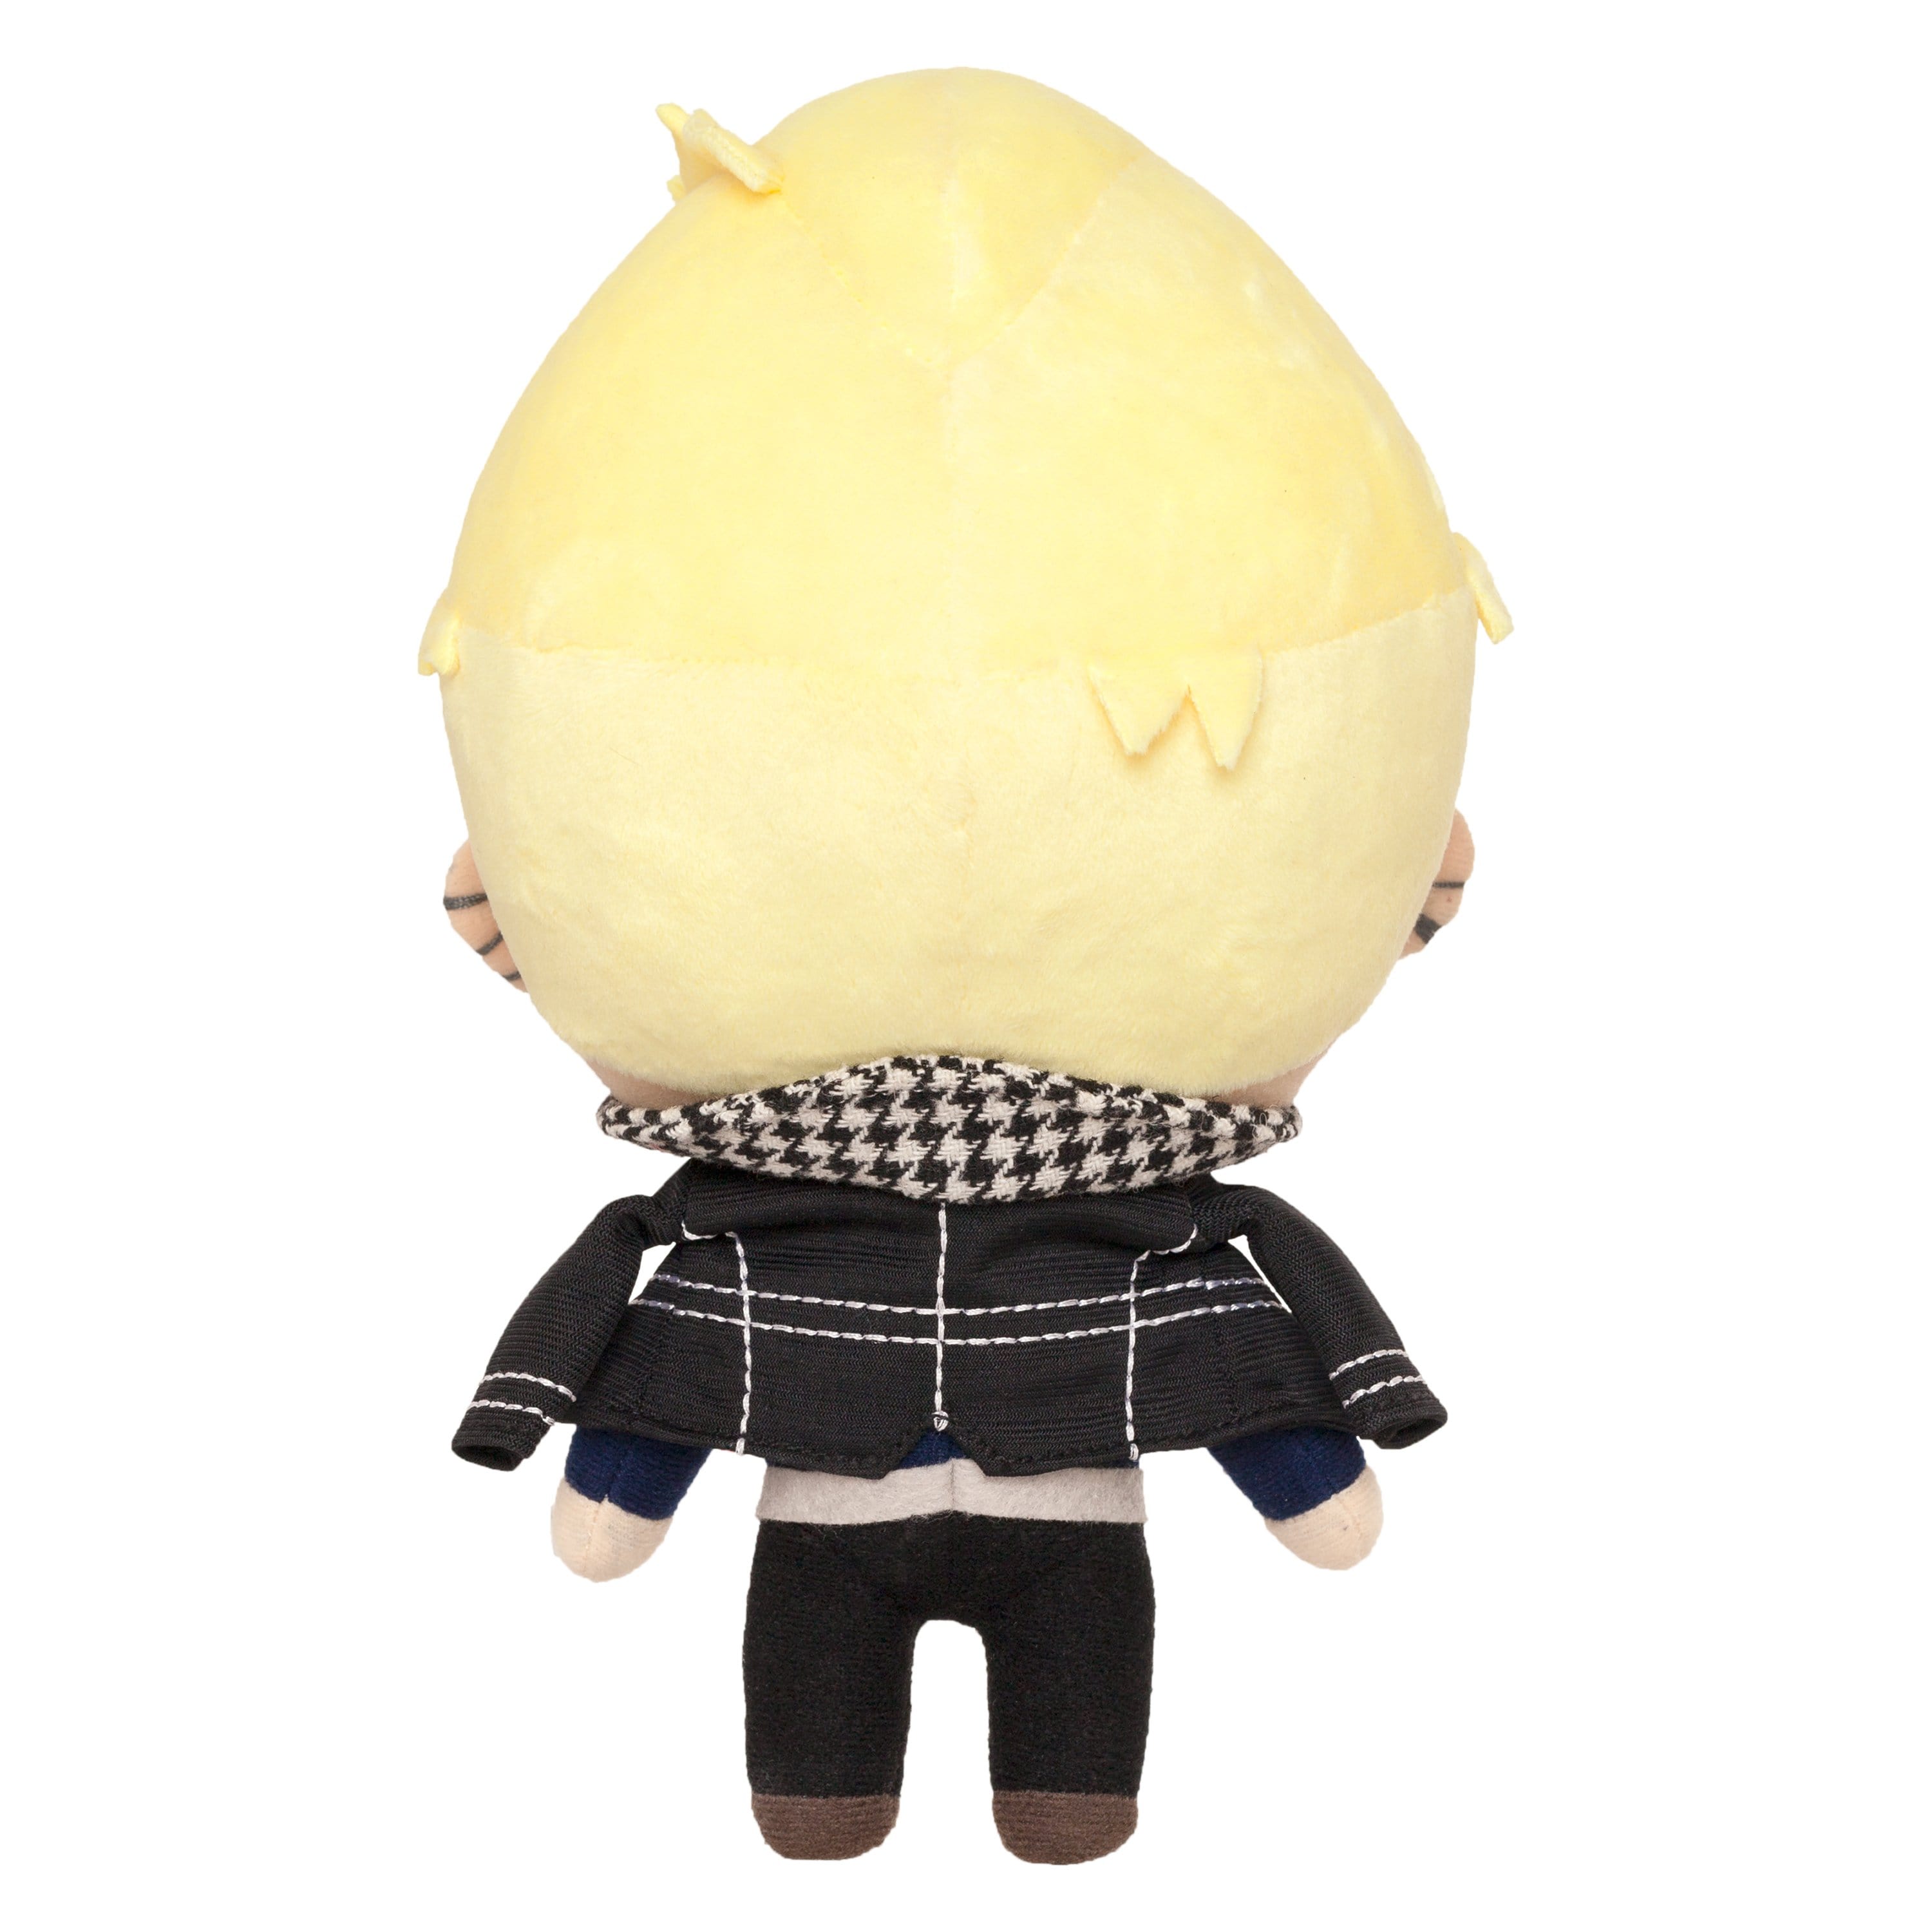 Persona 4 - 10" Kanji Tatsumi Collector's Stuffed Plush Back View